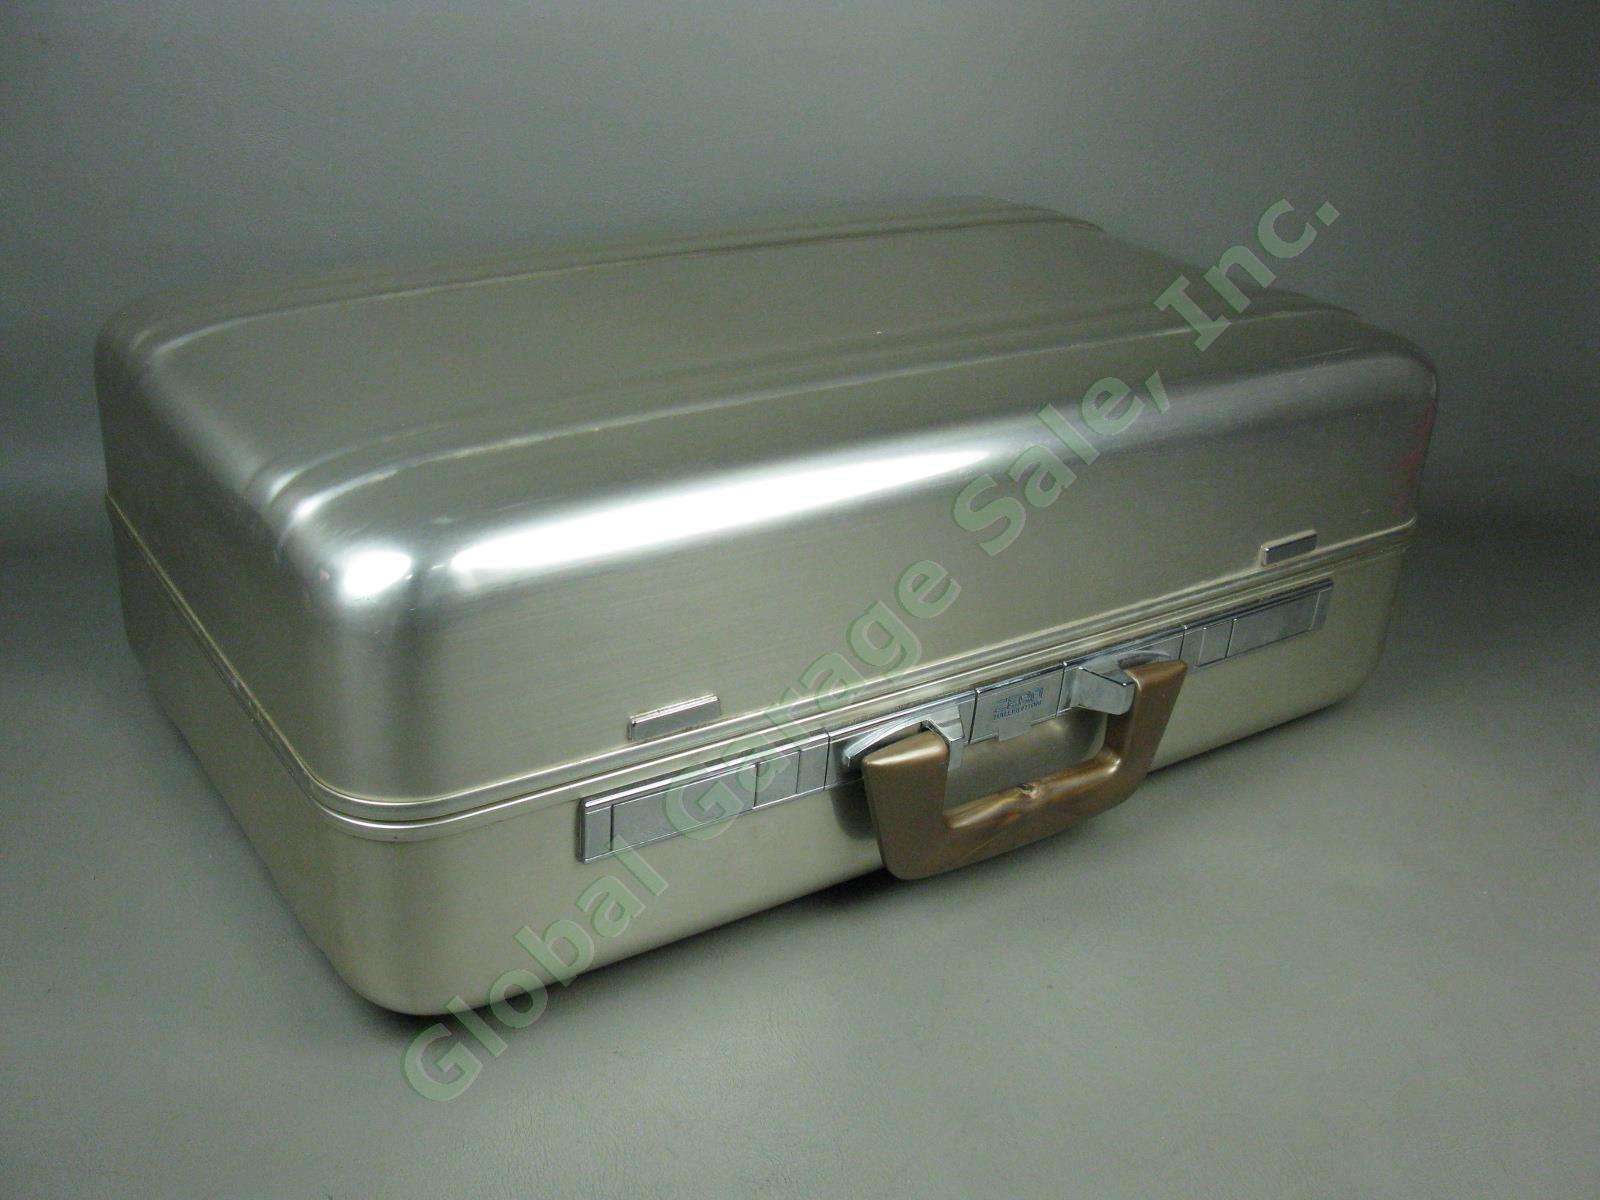 Zero Halliburton Presto Aluminum Combo Lock Briefcase Suitcase Luggage 21x13x8 3